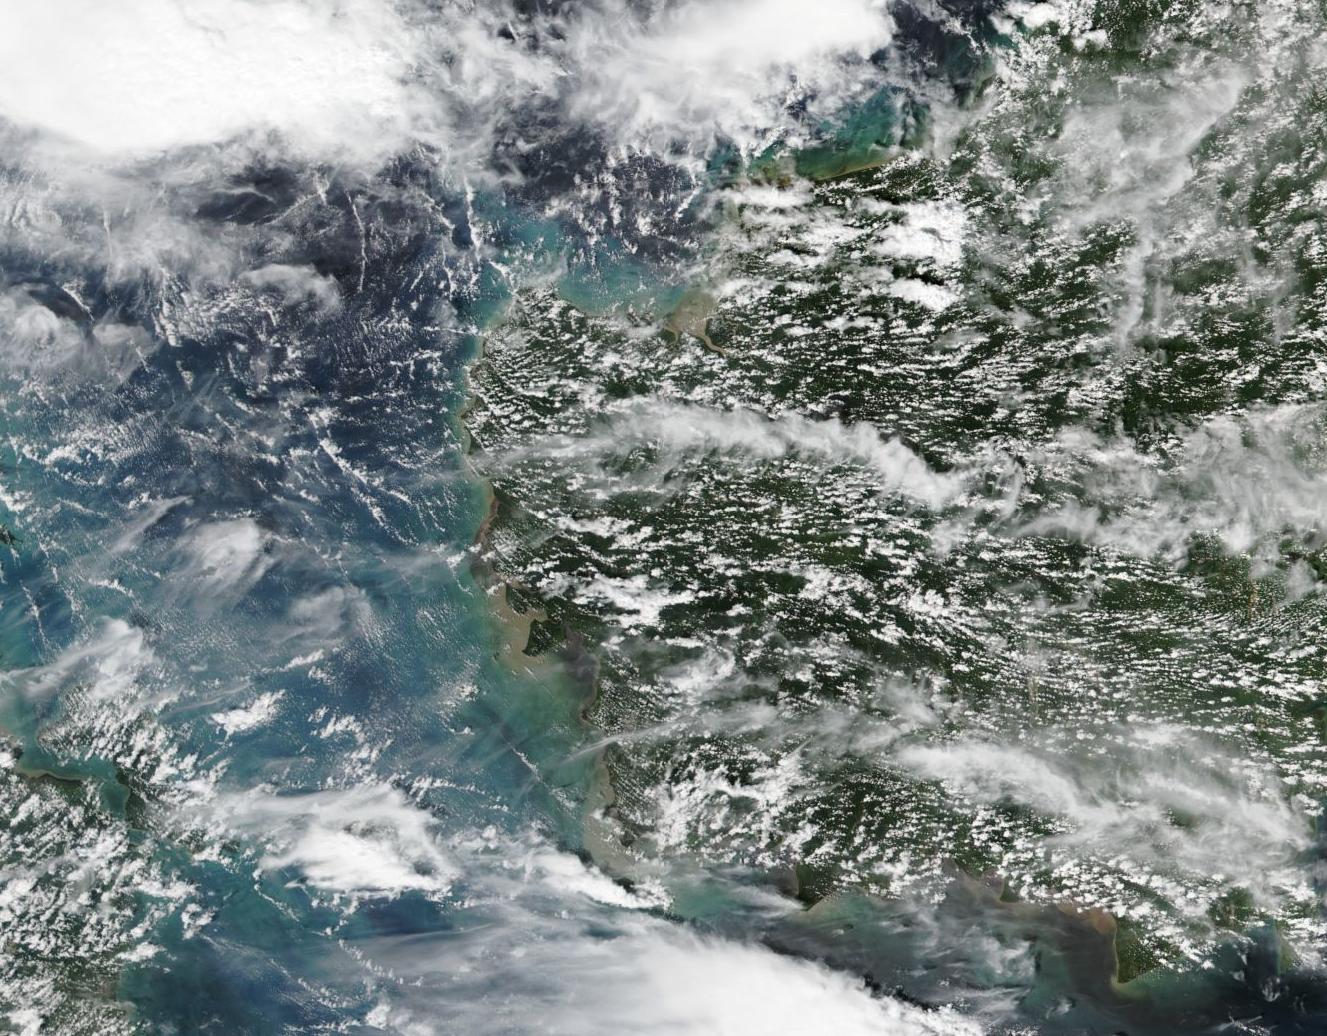 West Sulawesi on 8 December 2020. Image: NASA Worldview.